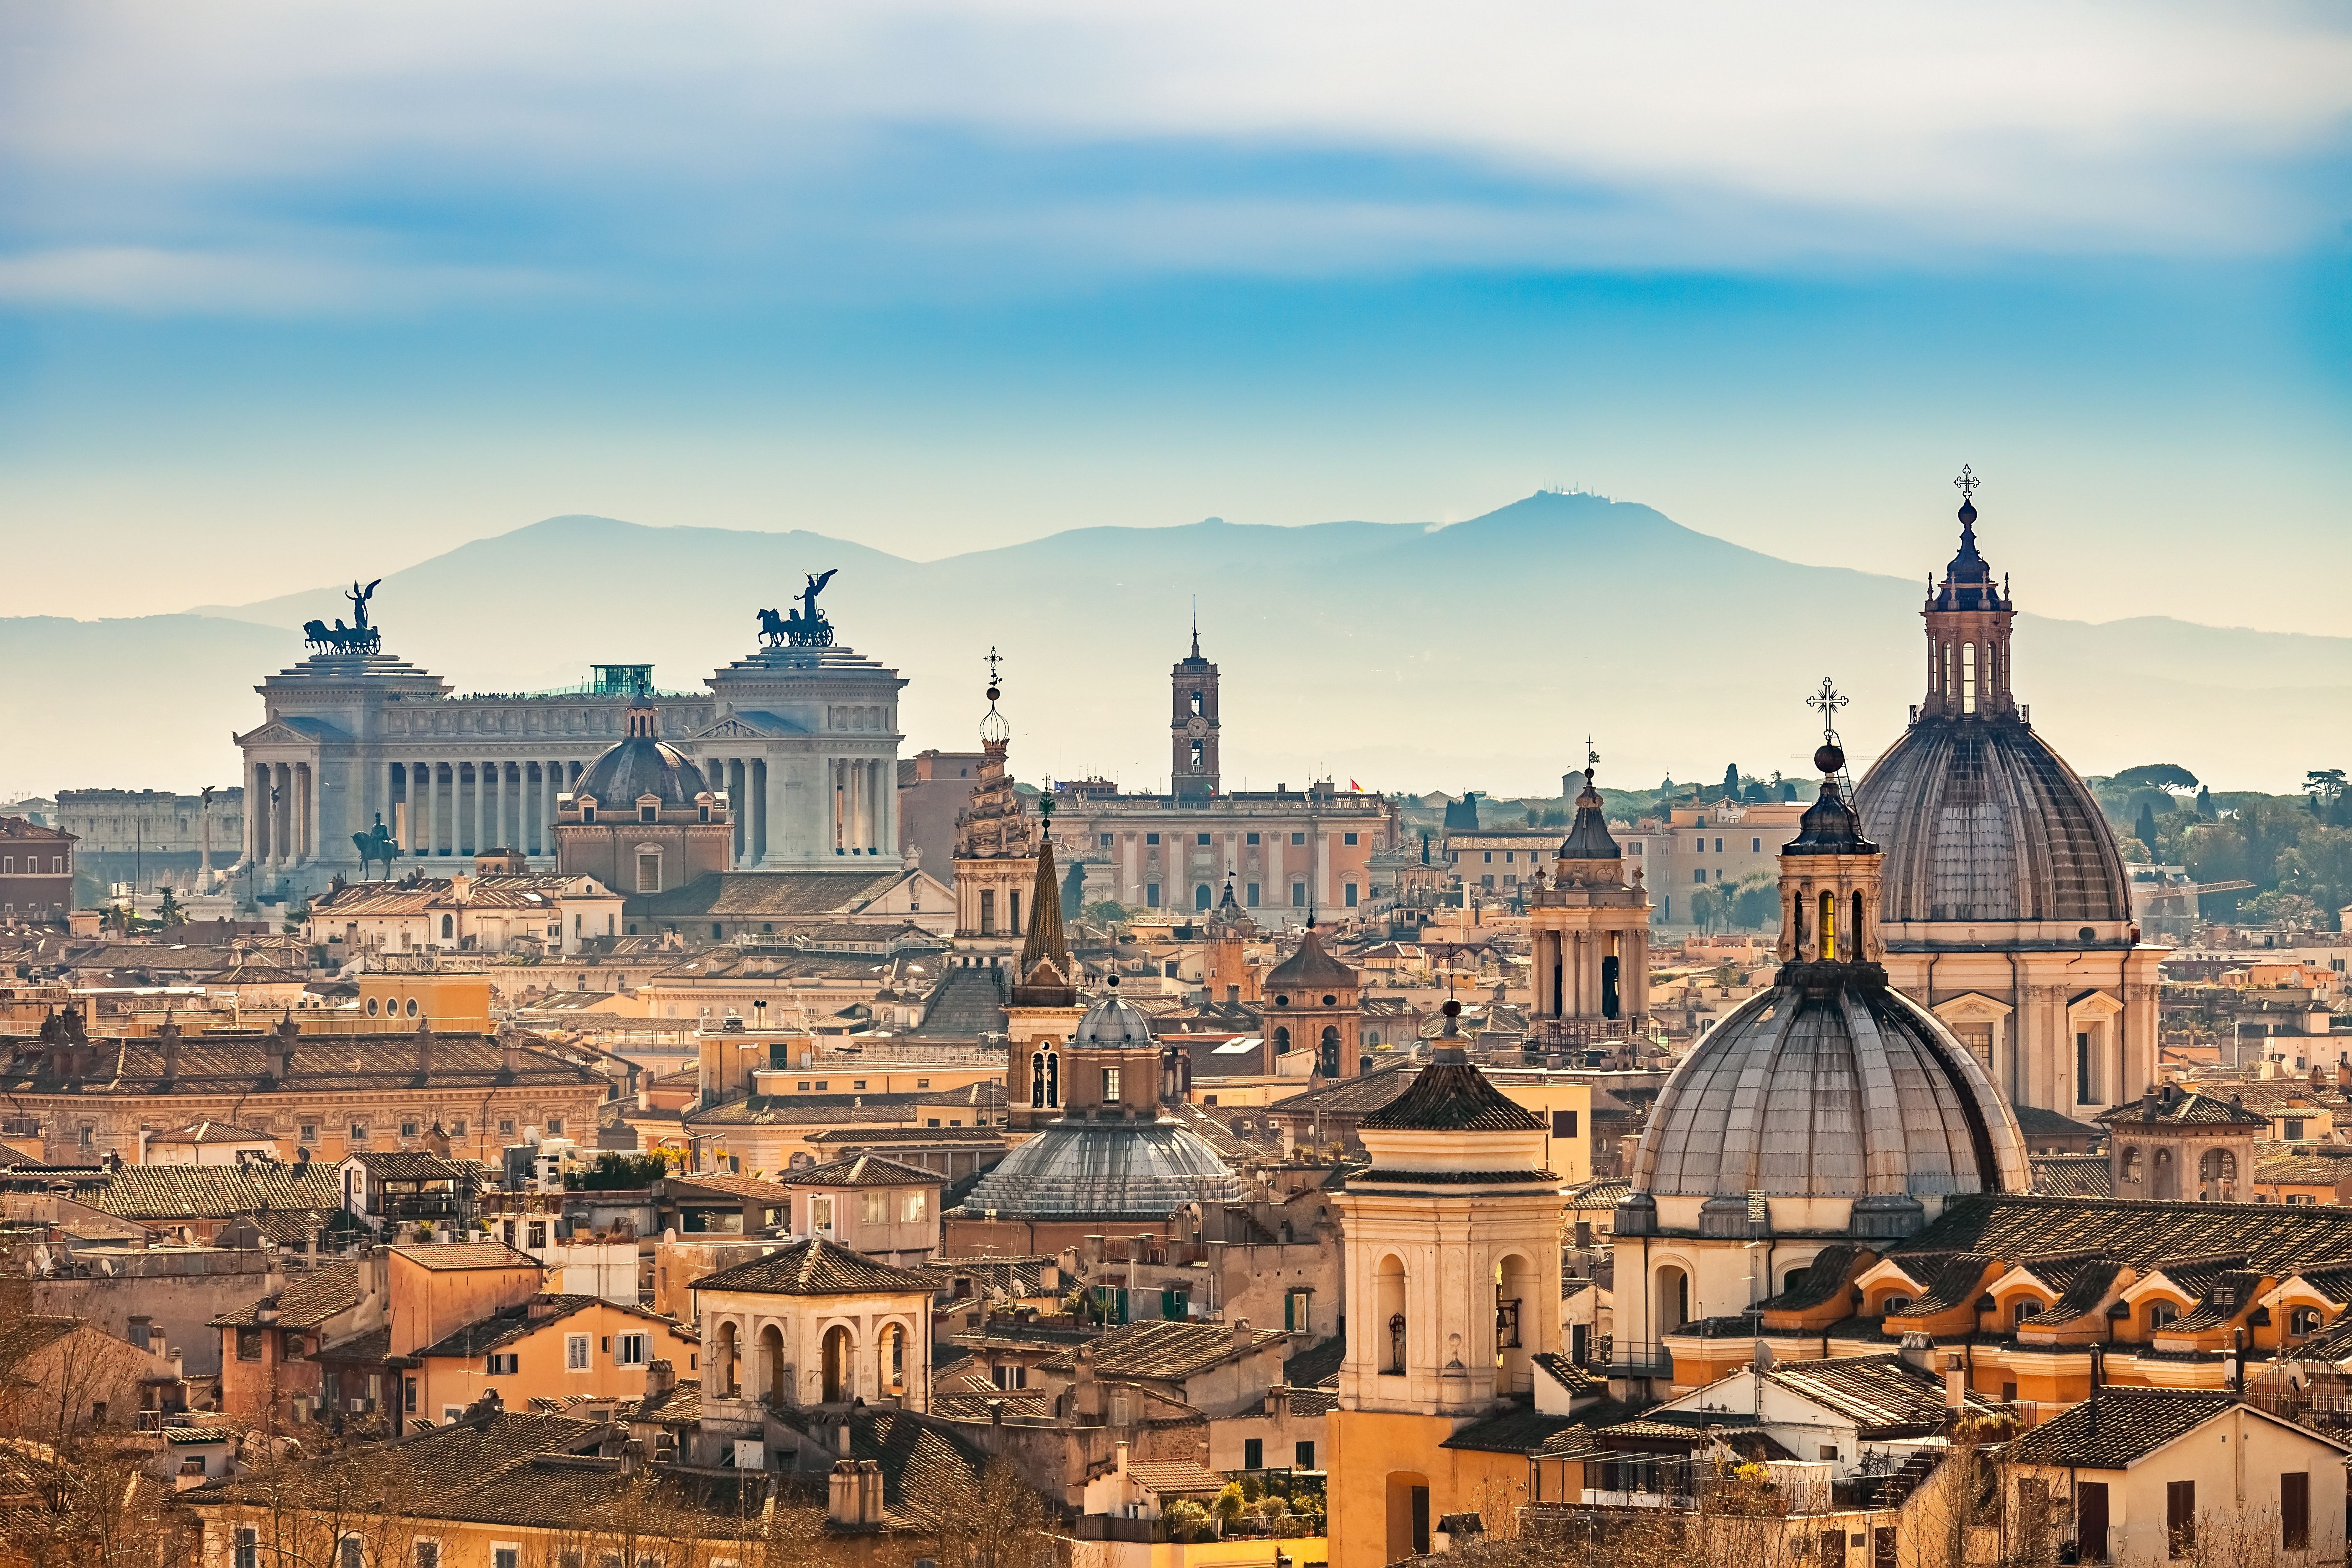 The skyline of Rome, Italy